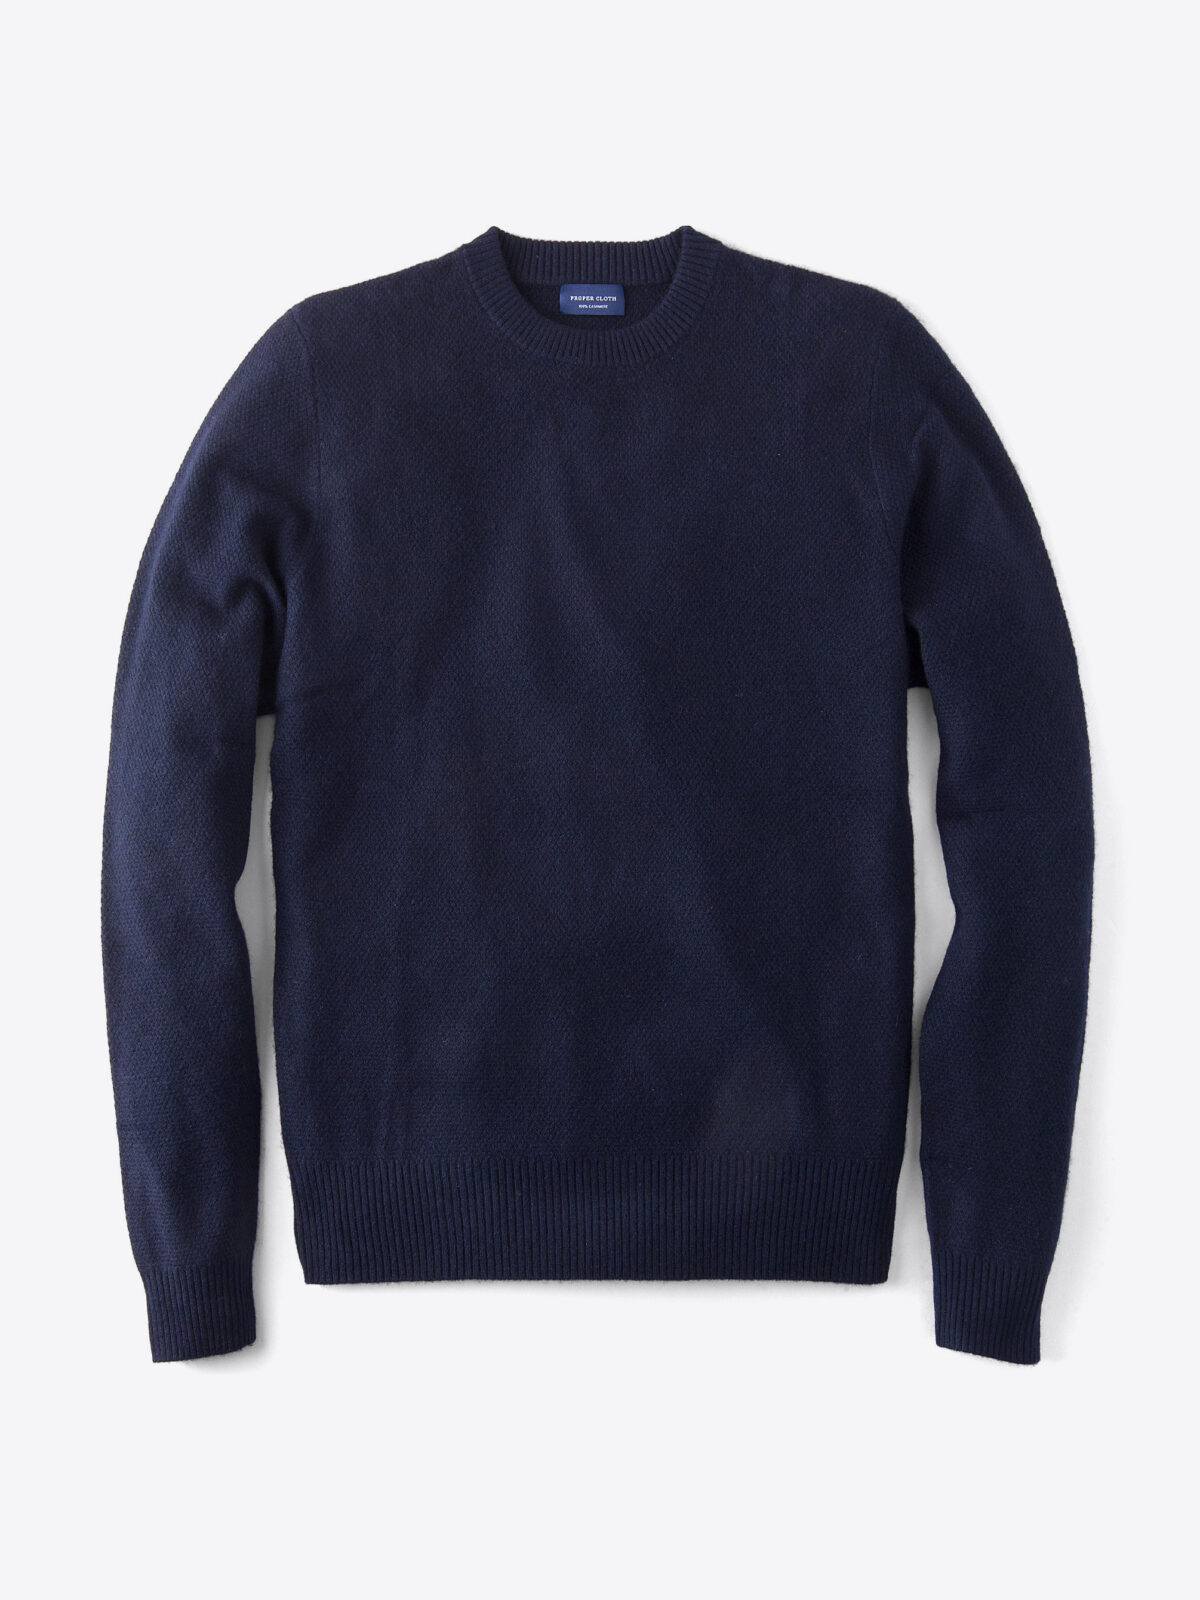 Navy Cobble Stitch Cashmere Sweater